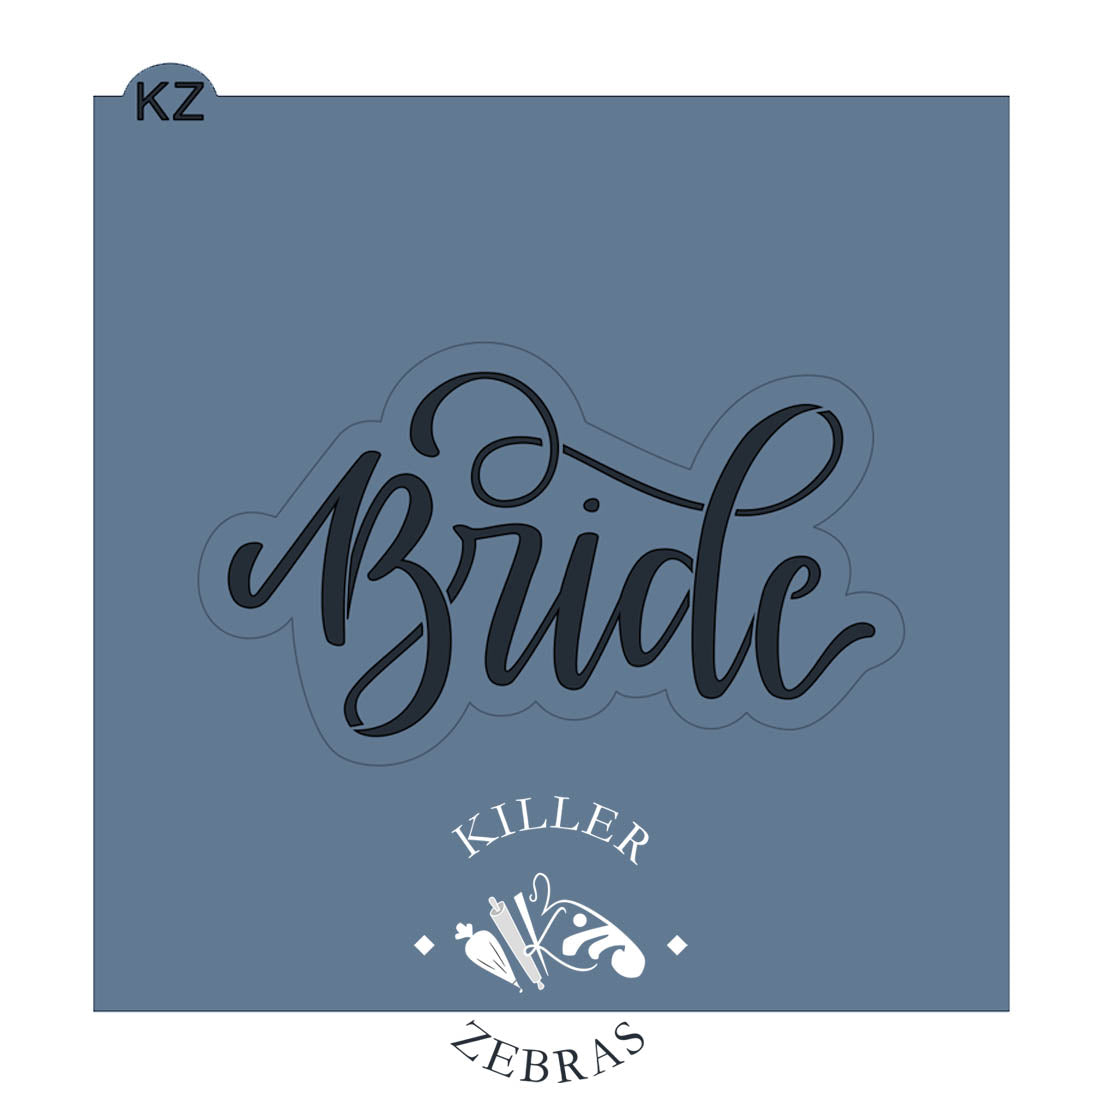 Bride Cutter/Stencil